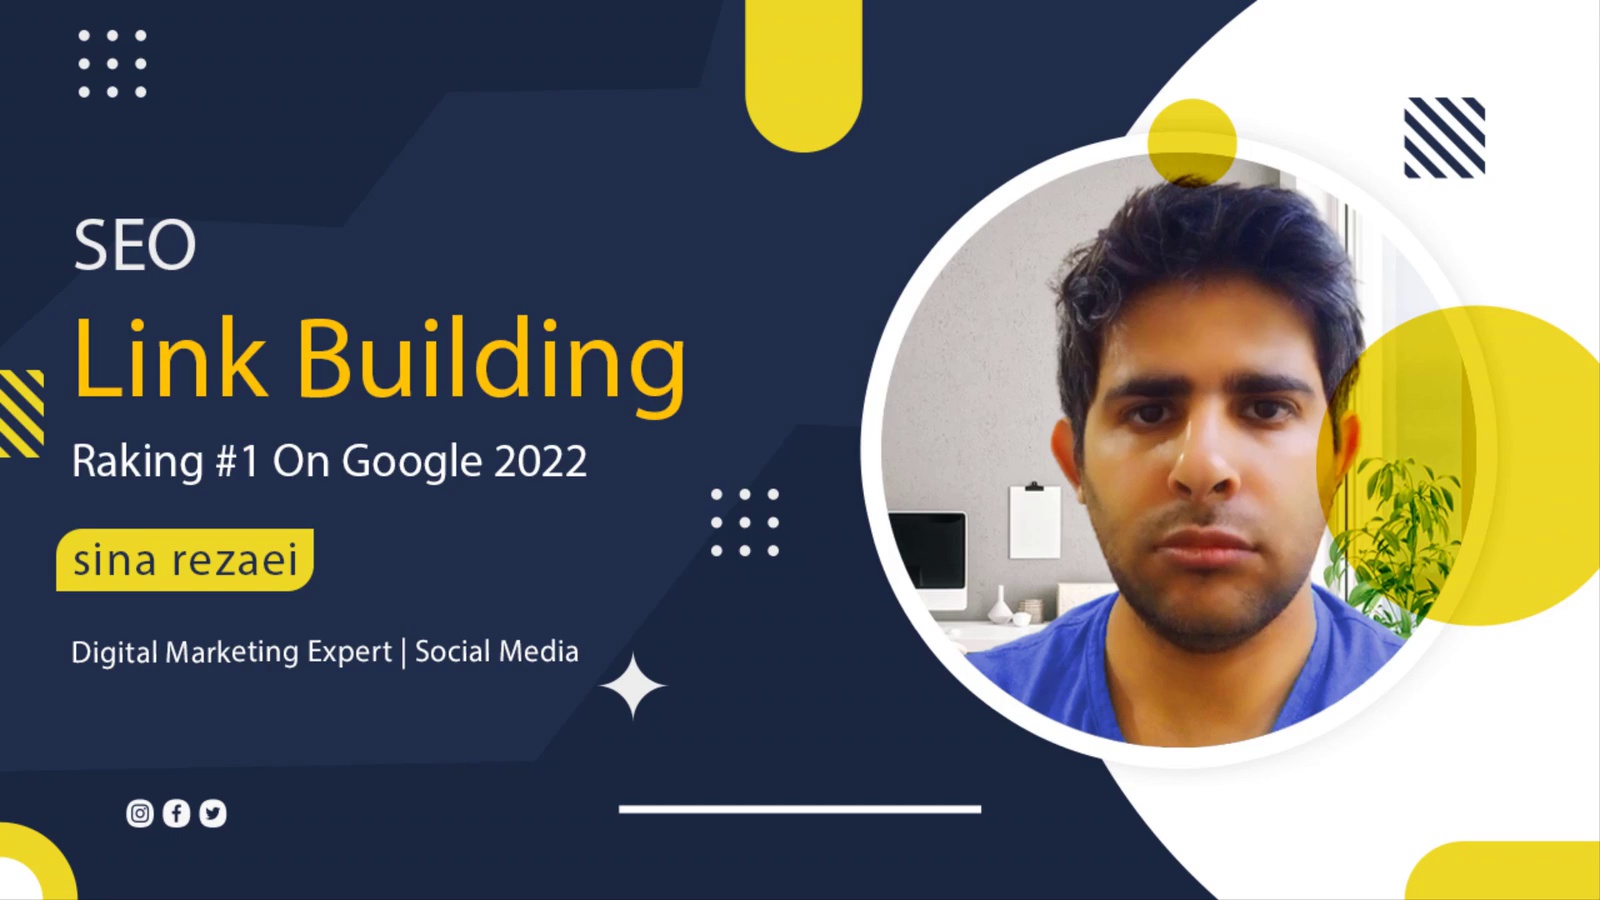 Seo Link Building Ranking #1 on Google 2022